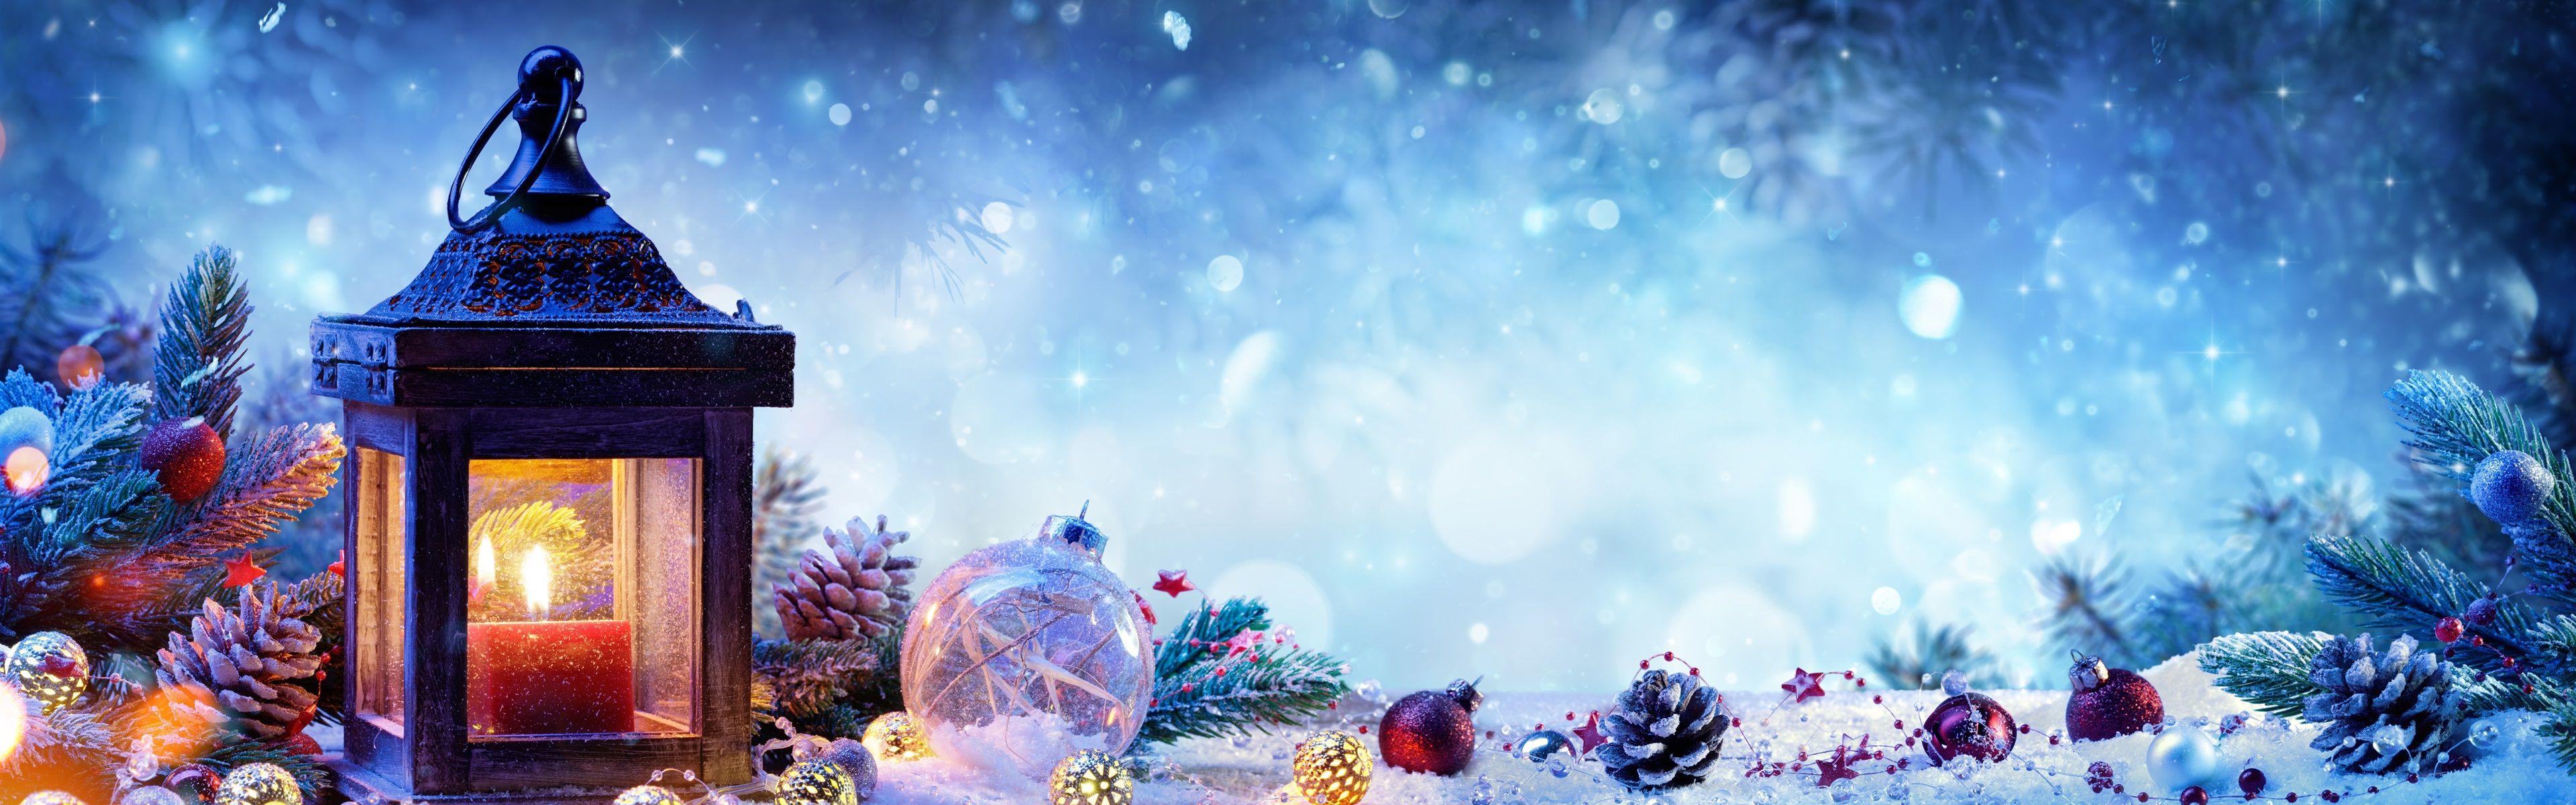 Panoramic Christmas Wallpapers Top Free Panoramic Christmas Backgrounds Wallpaperaccess 7648